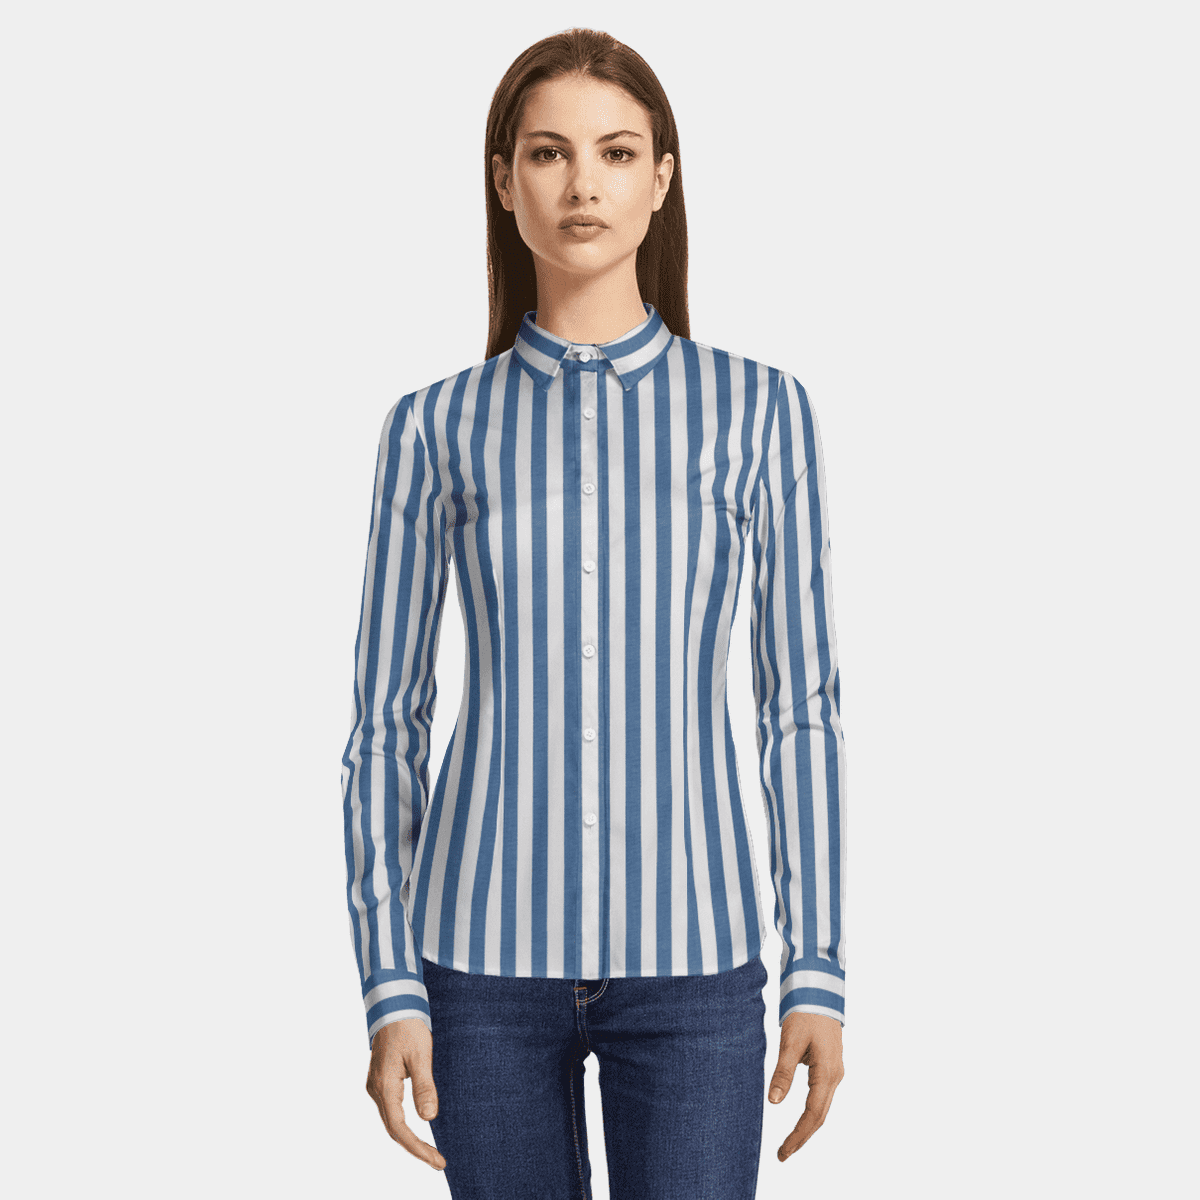 Blue striped poplin cotton Dress Shirt $65 | Sumissura